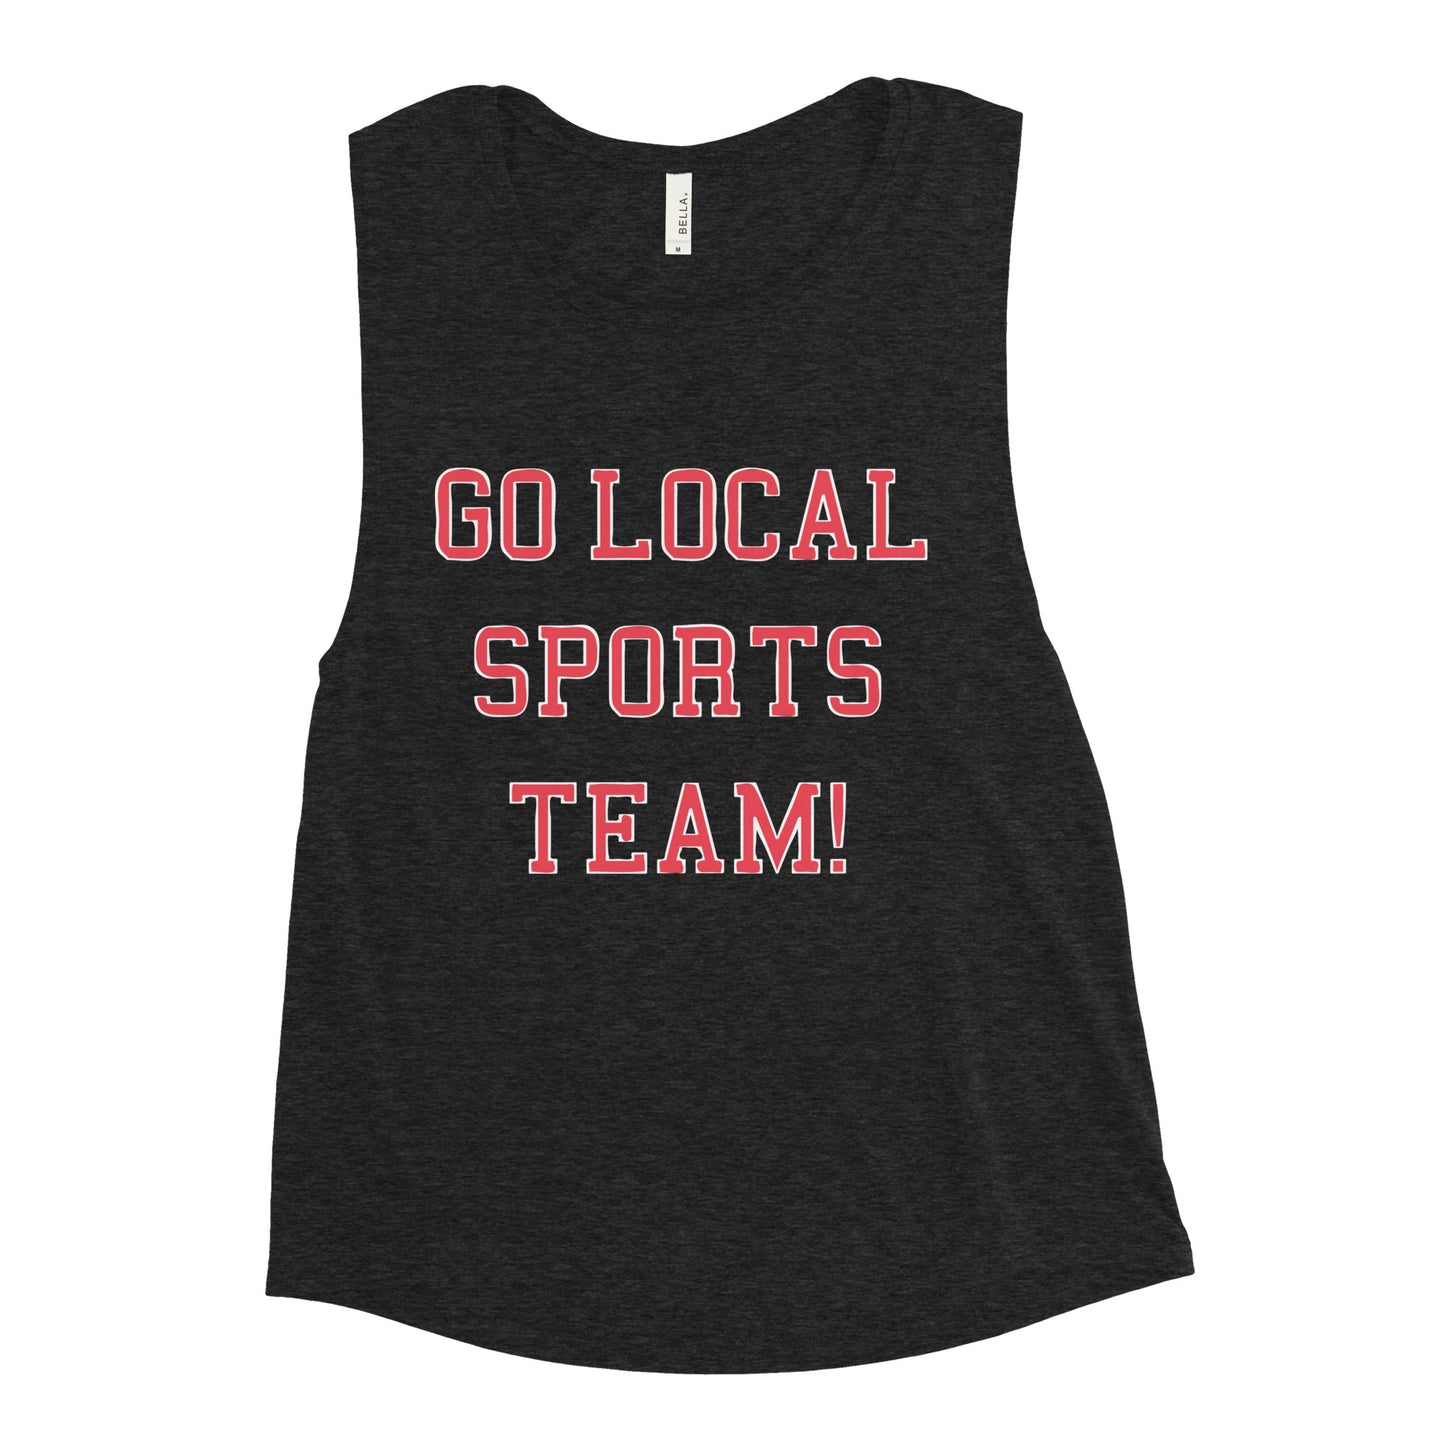 Go Local Sports Team! Women's Muscle Tank